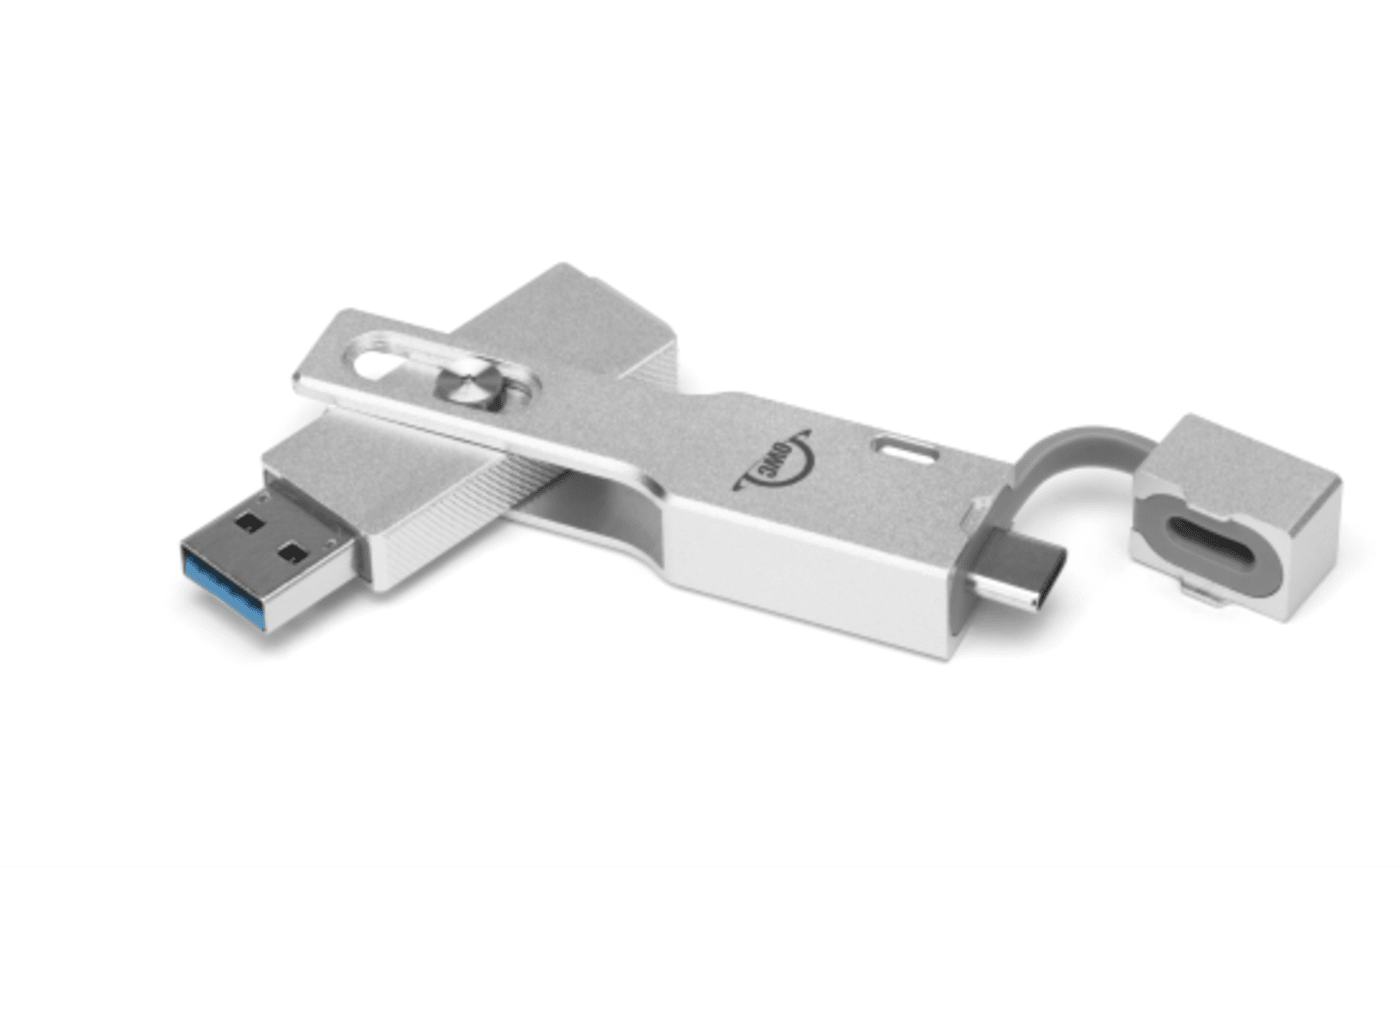 Y-Disk 2 in 1 OTG USB 3.0 Memory Flash Drive for iPhone, iPad, Mac